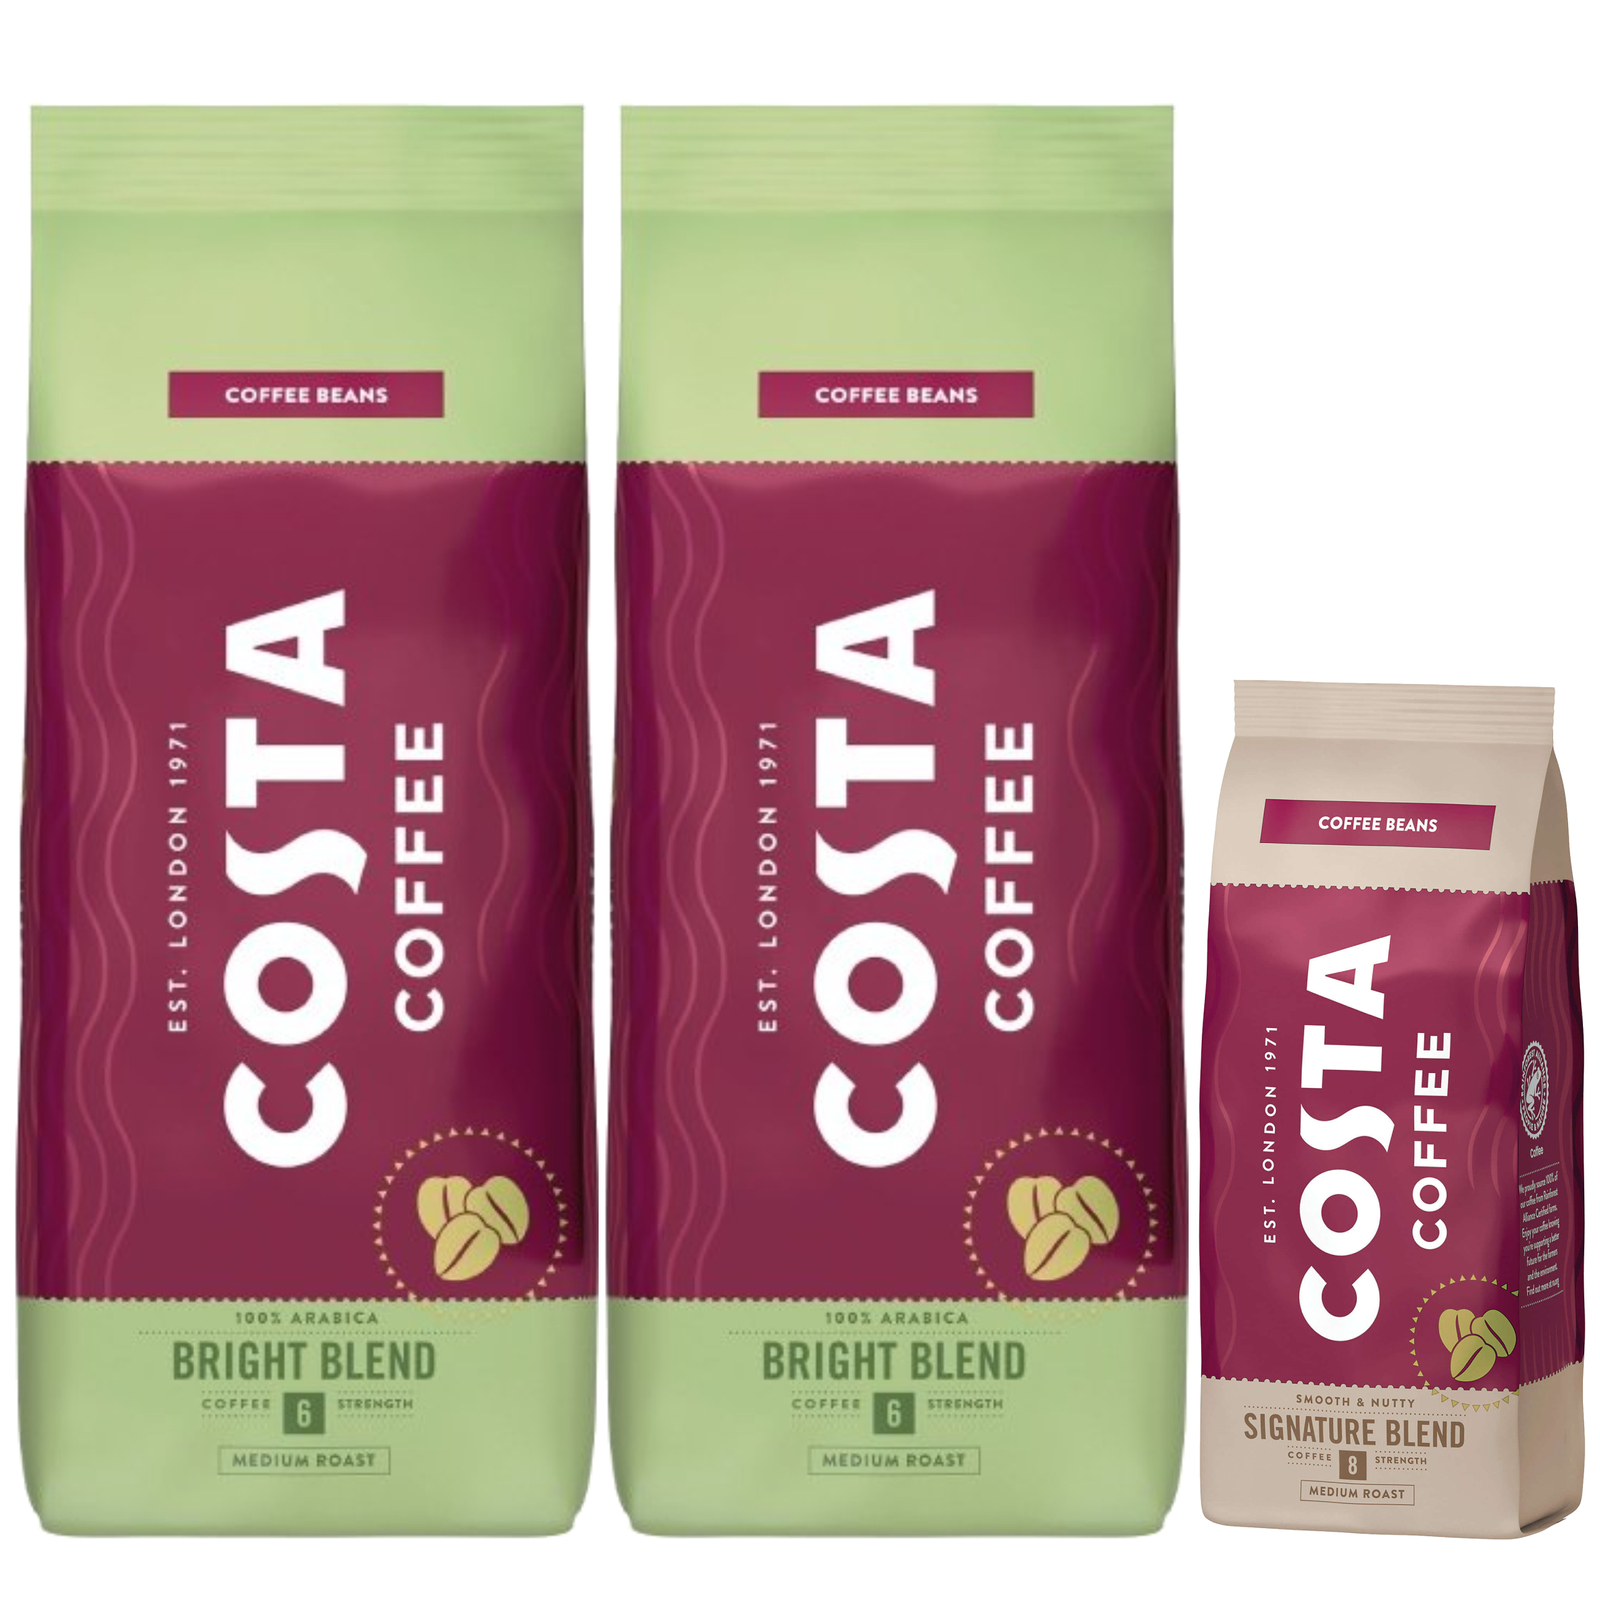 ZESTAW - Kawa ziarnista Costa Coffee Bright Blend zestaw 2x1kg + Costa Coffee Signature Blend 200g